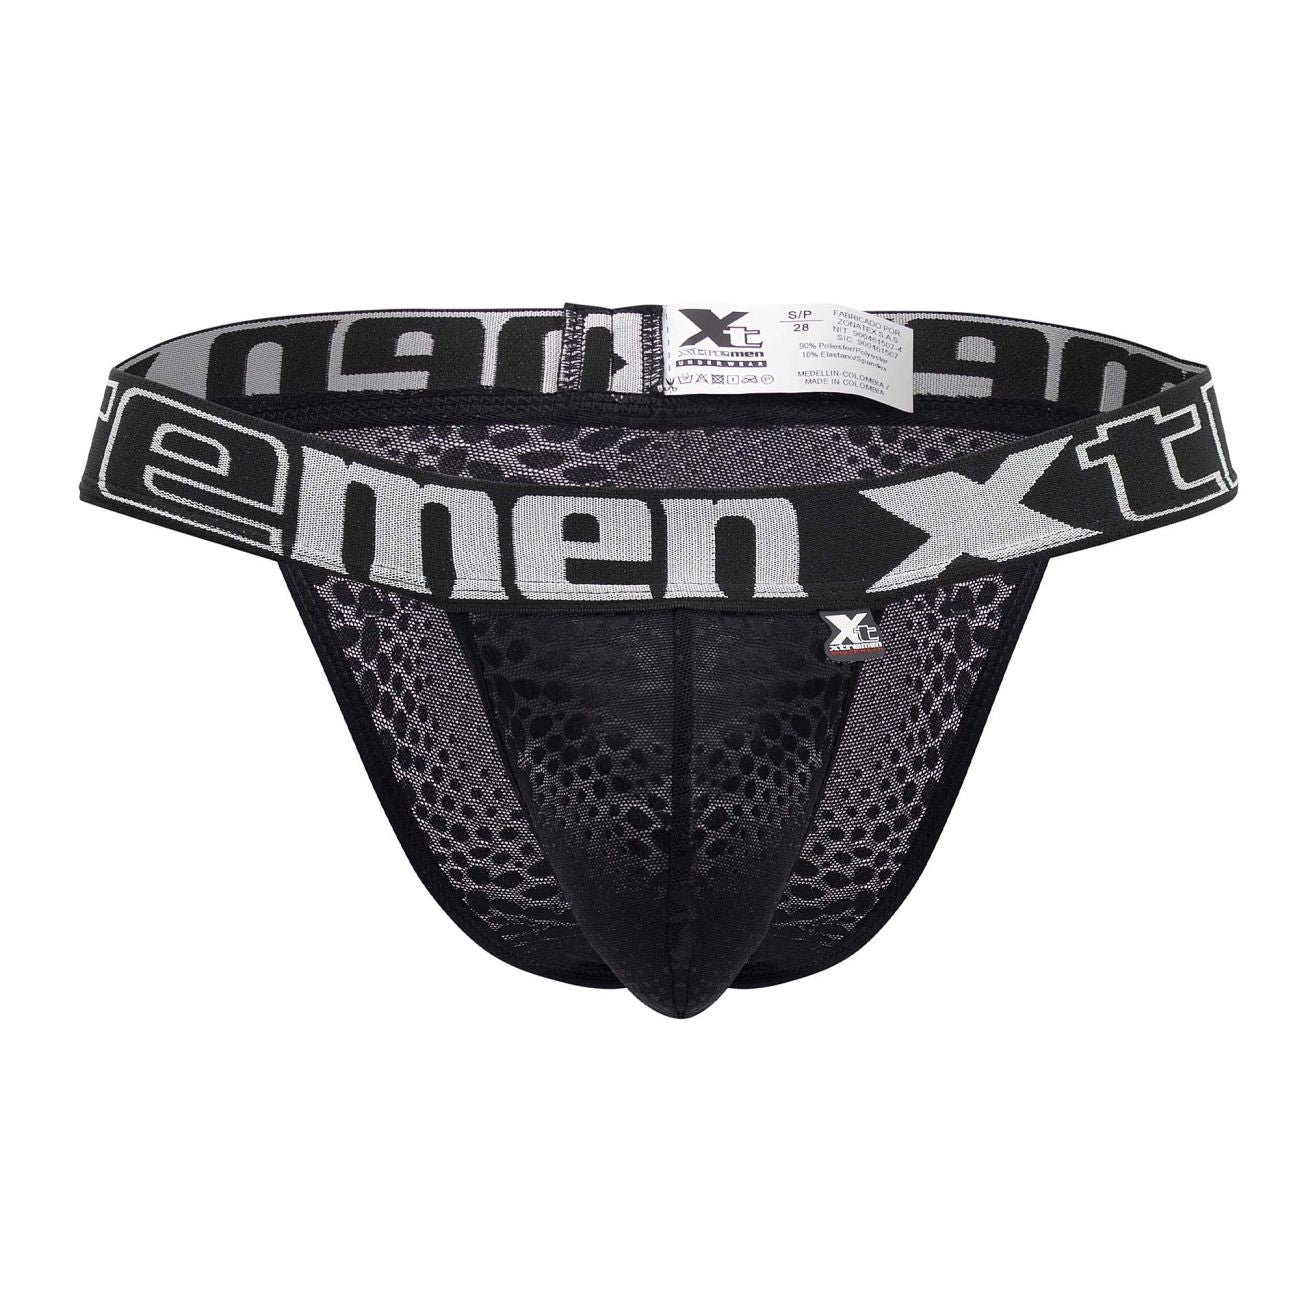 Xtremen 91122 Stylish Bikini Black